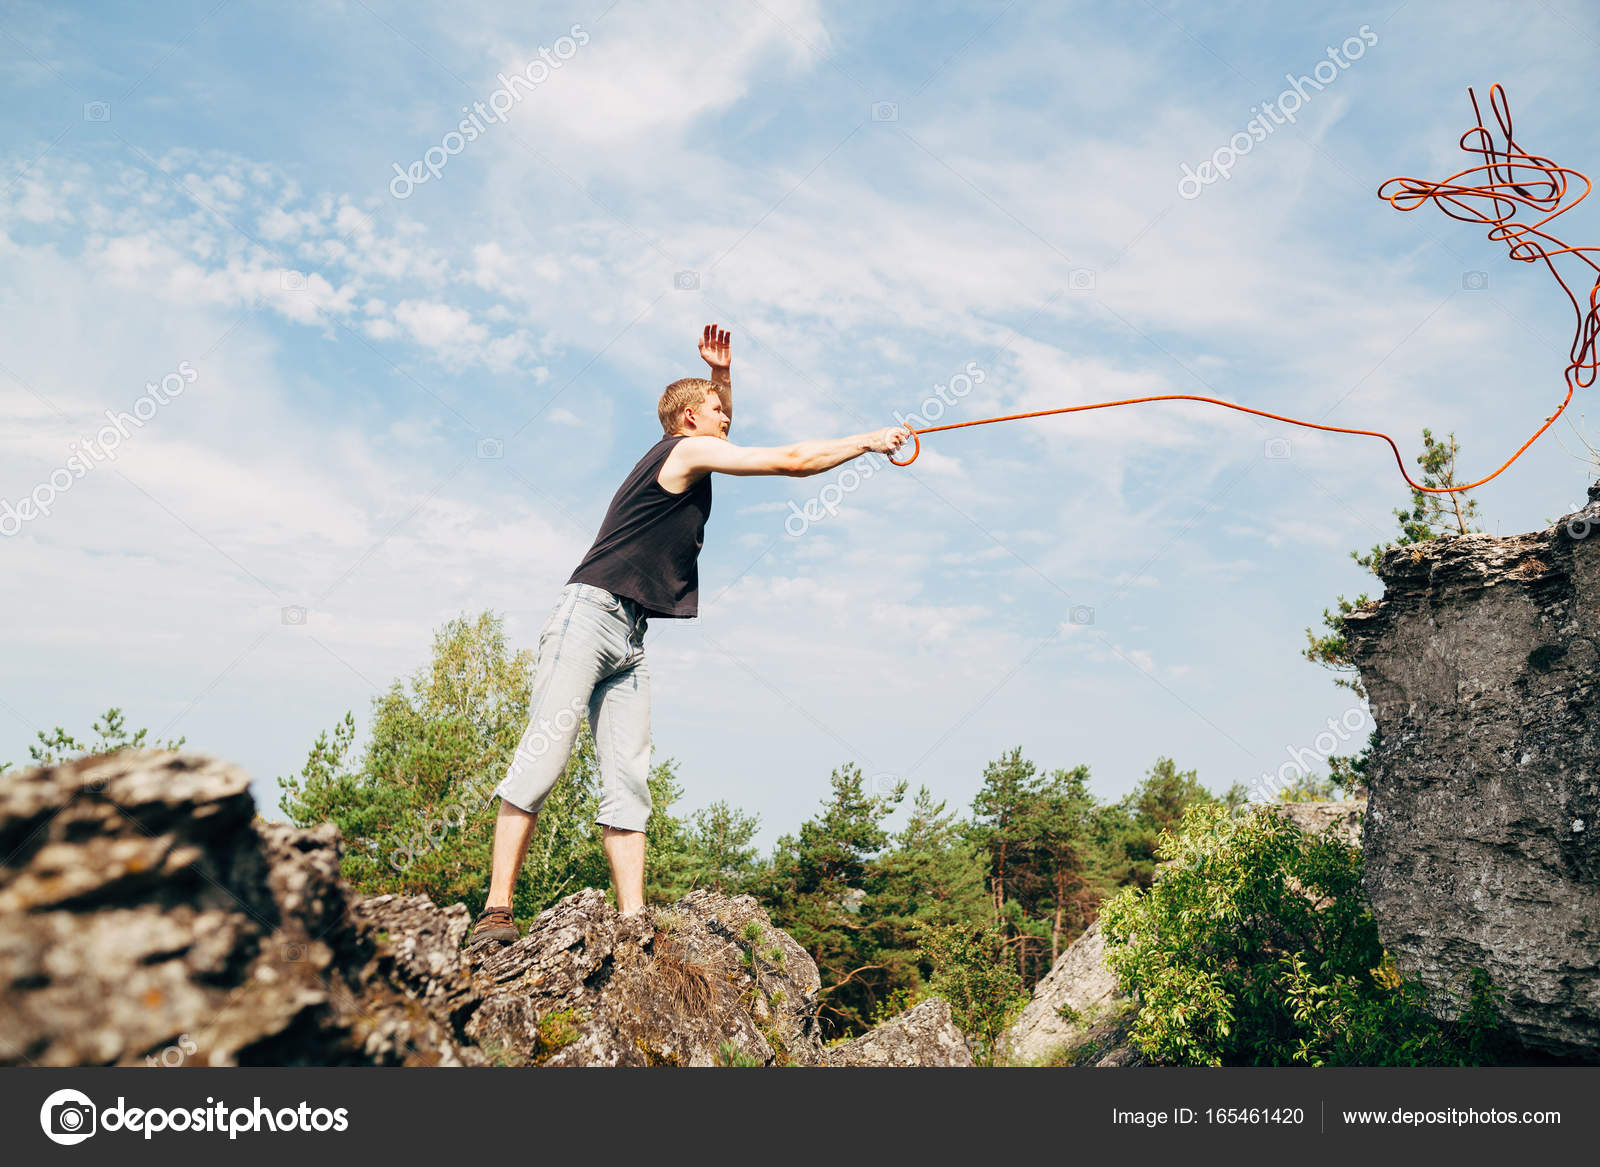 Man throwing rope on rock — Stock Photo © Amvorsuf #165461420